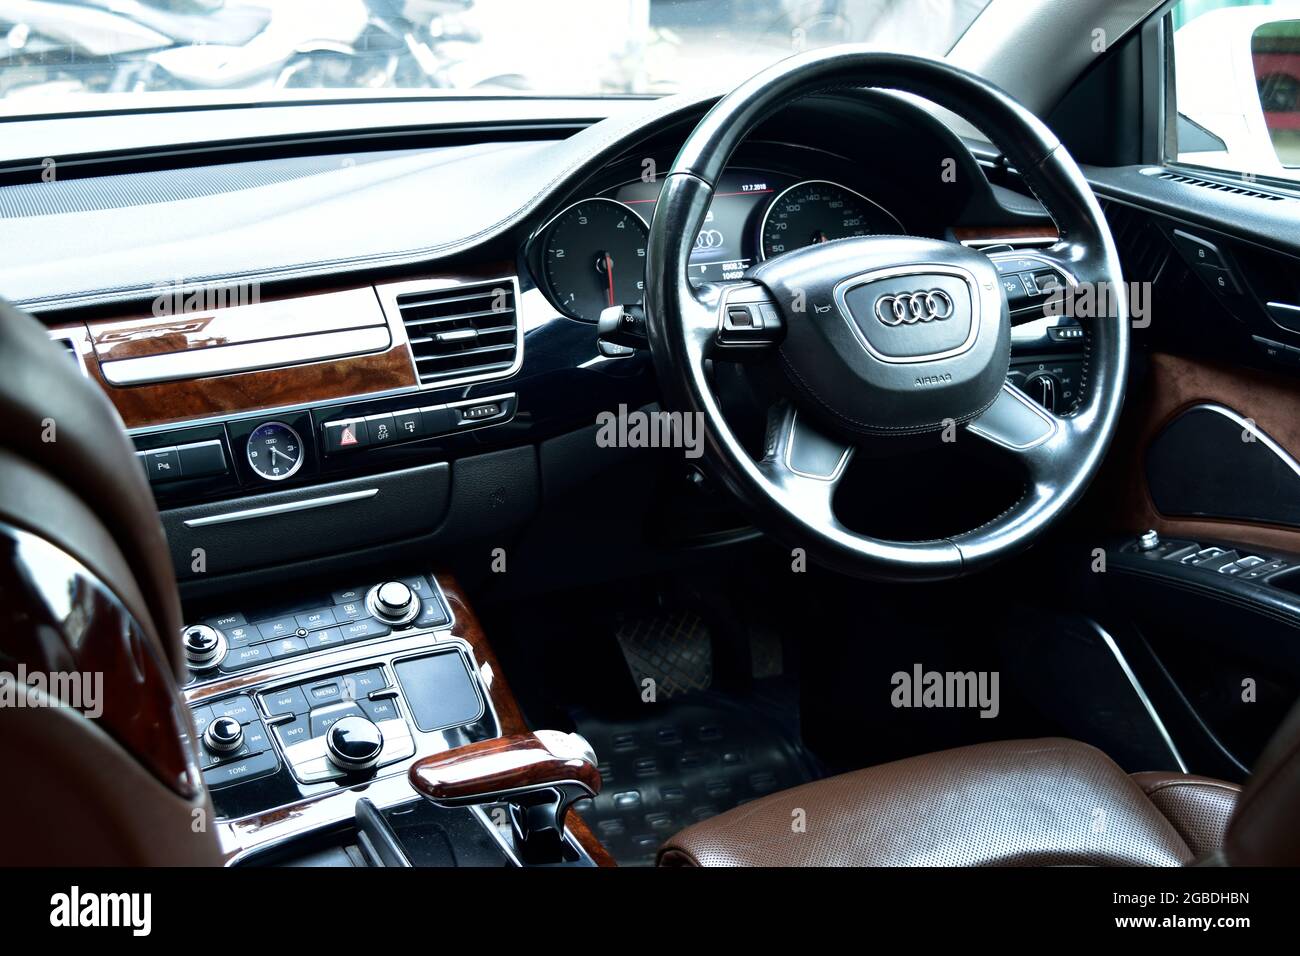 Der Innenraum Des Luxus-Audi, Audi Interieur Aus Holz Stockfotografie -  Alamy